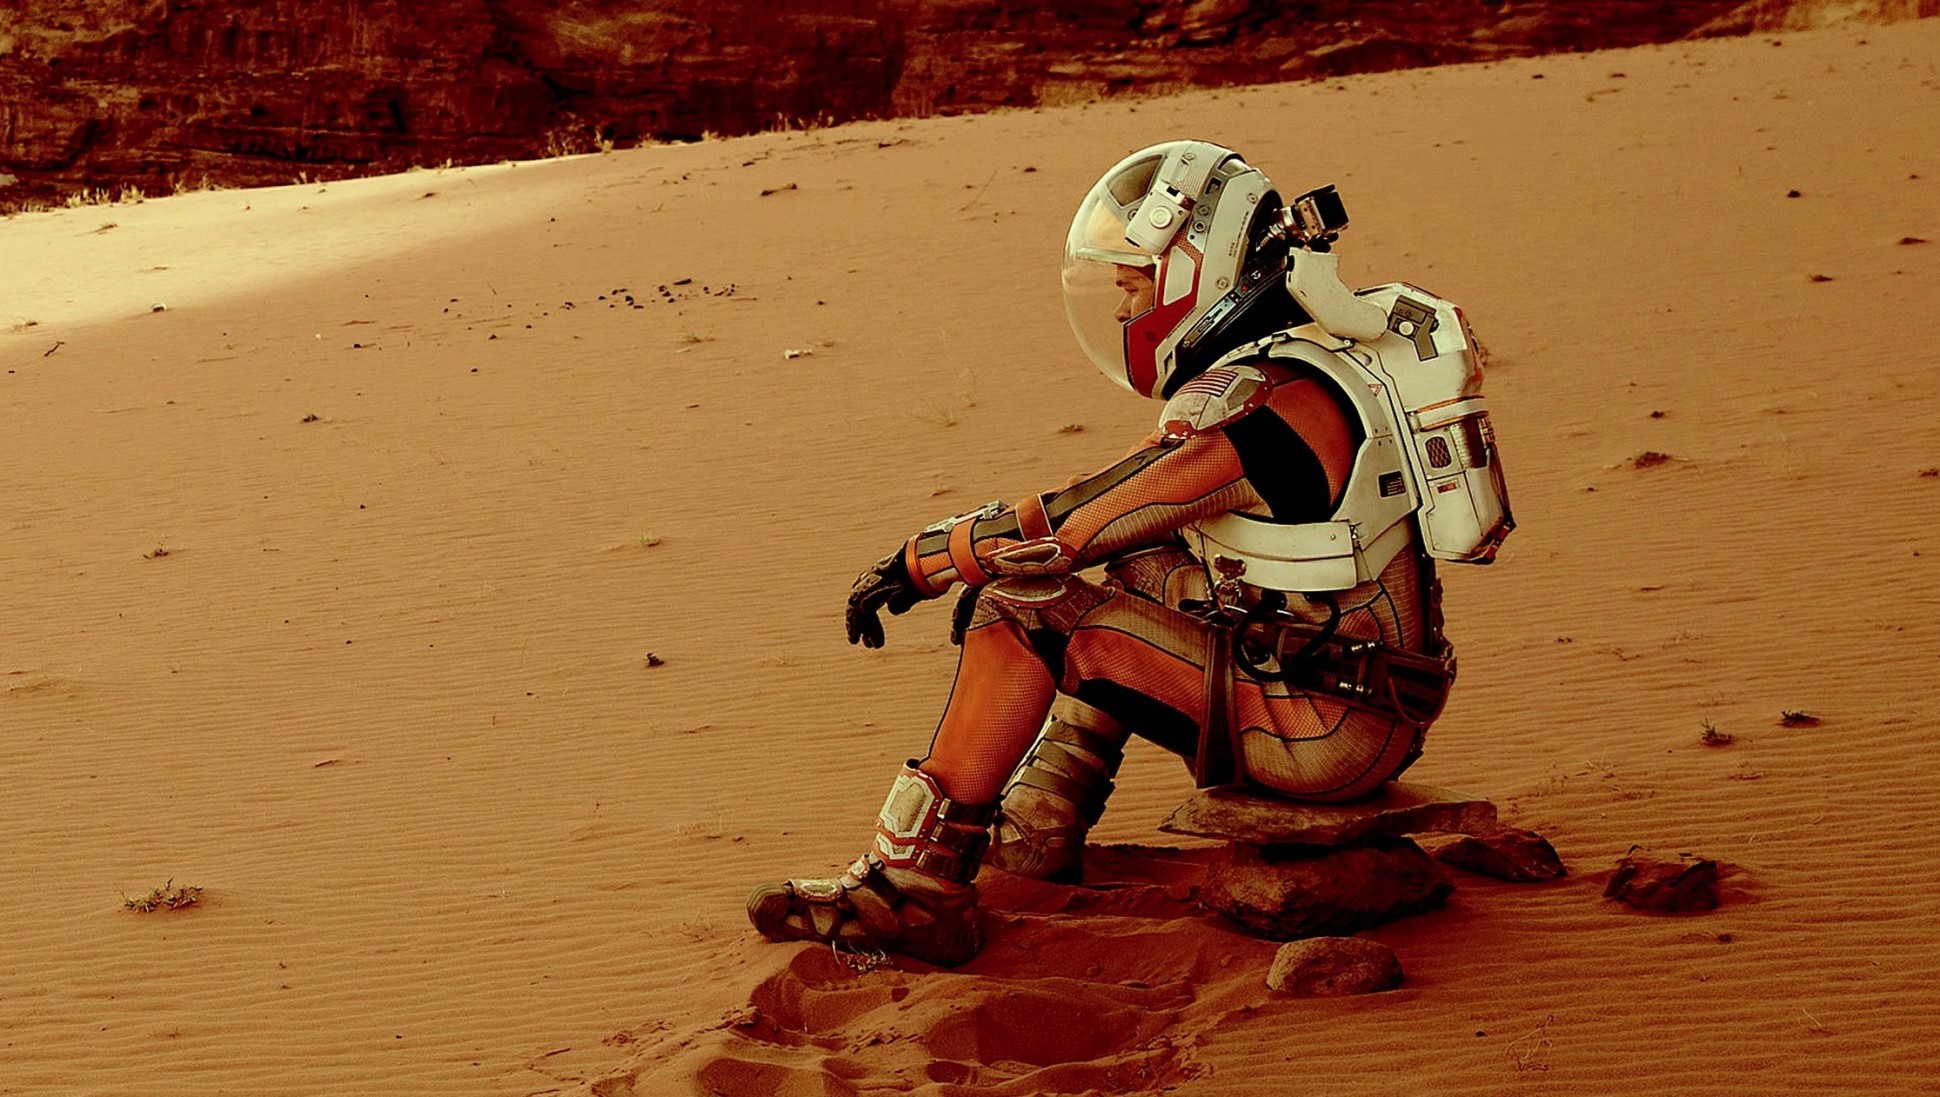 Matt Damon in The Martian.